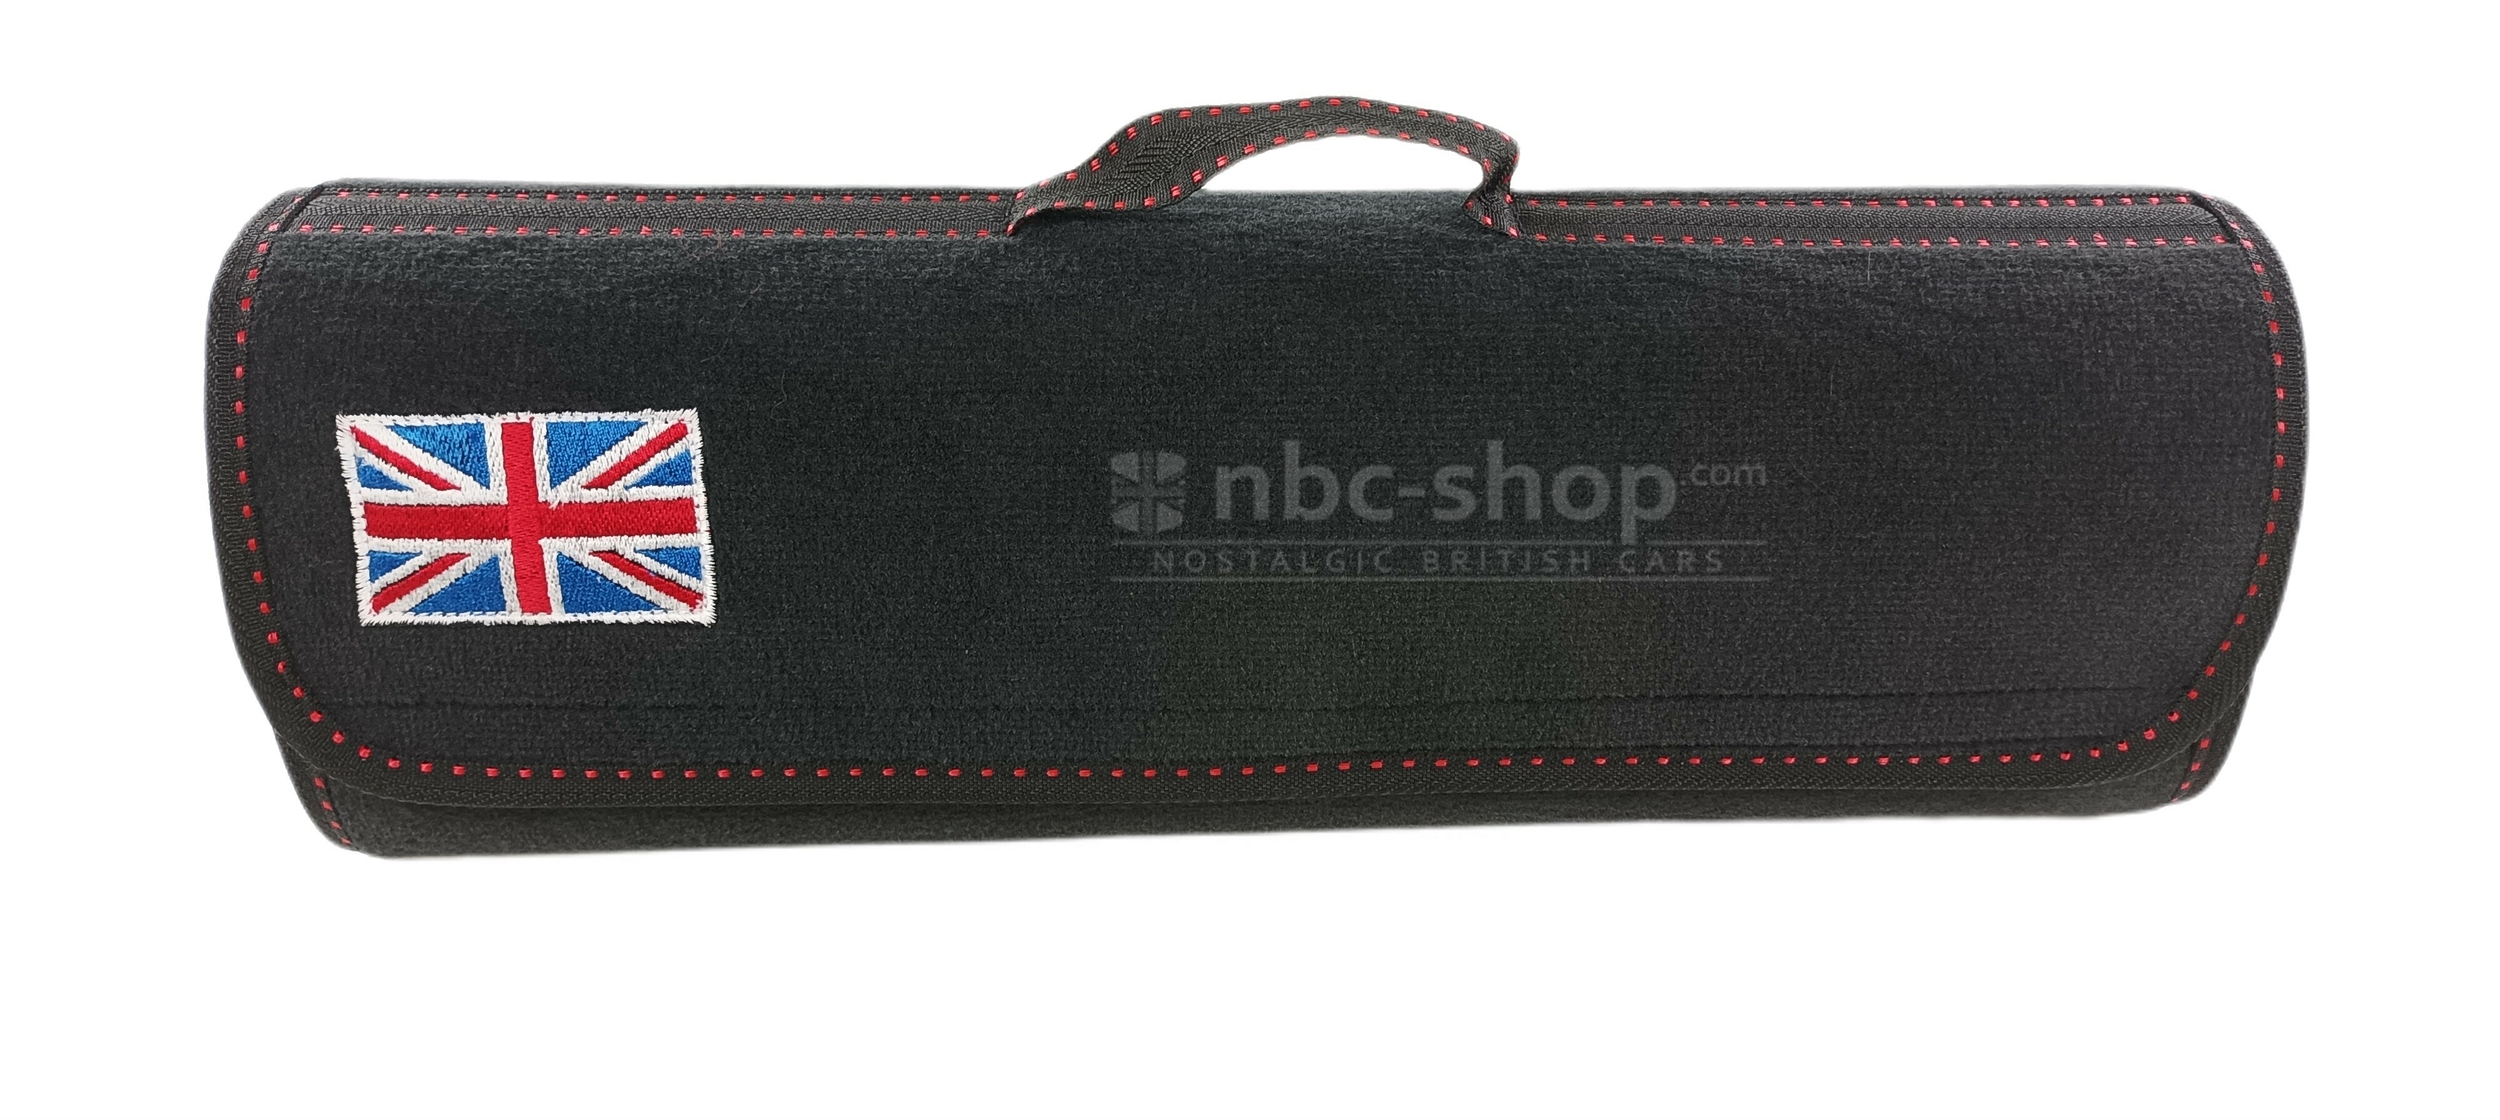 sac de coffre logo drapeau Union Jack nbc-shop